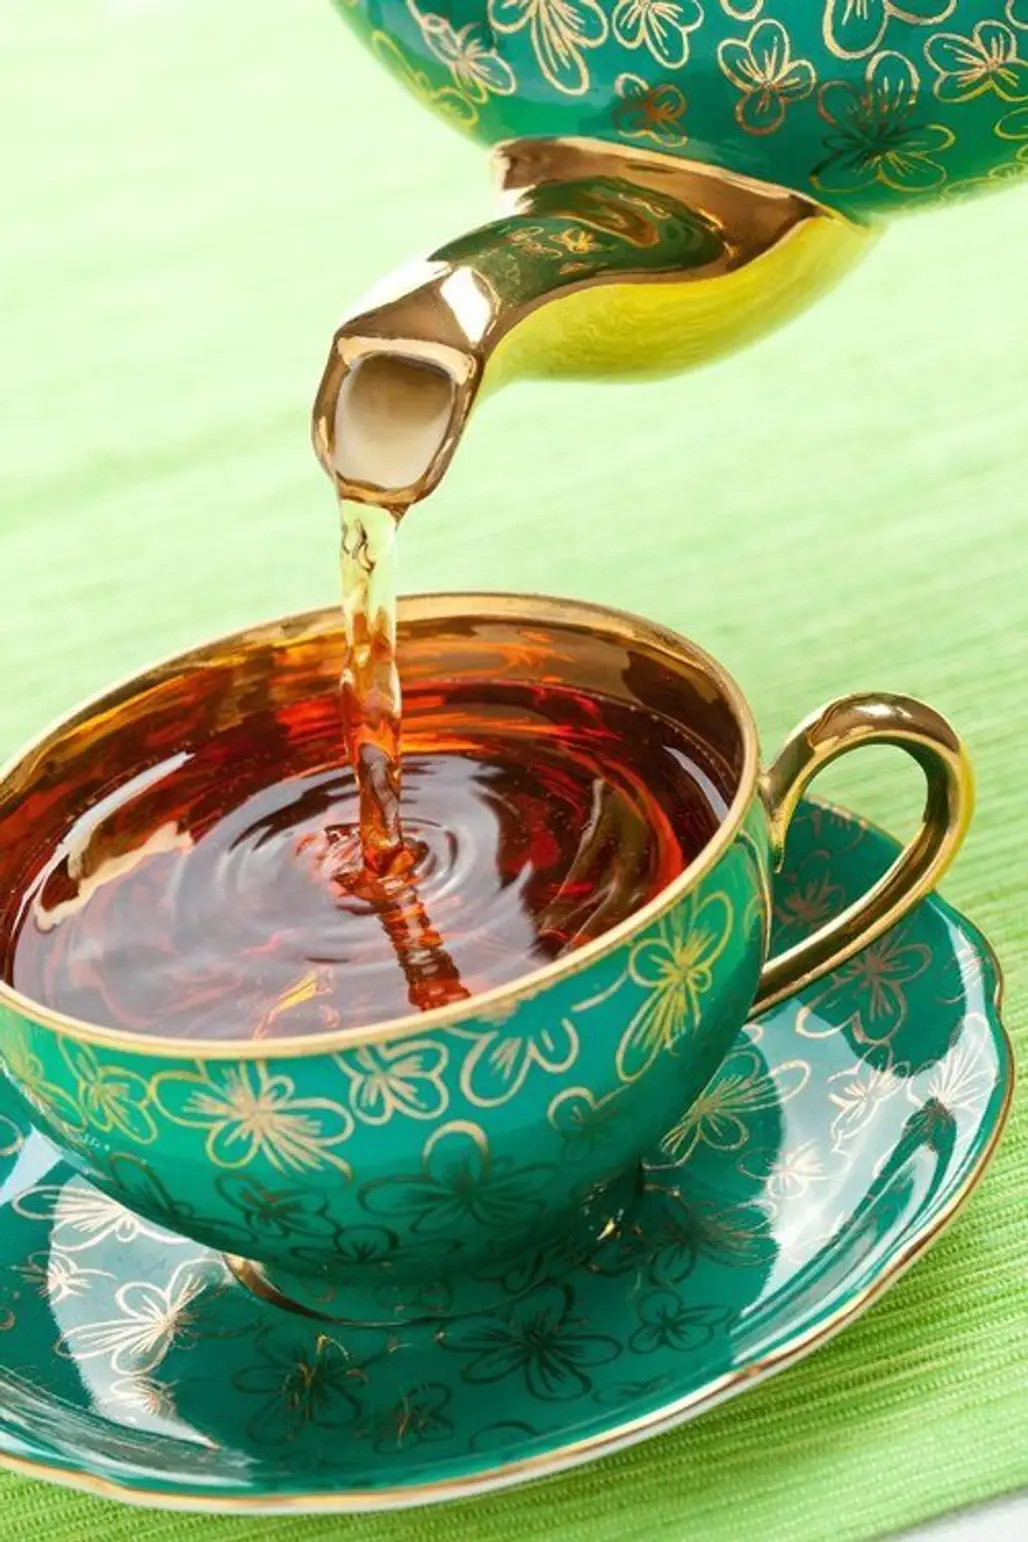 Sip a Mug of Green Tea